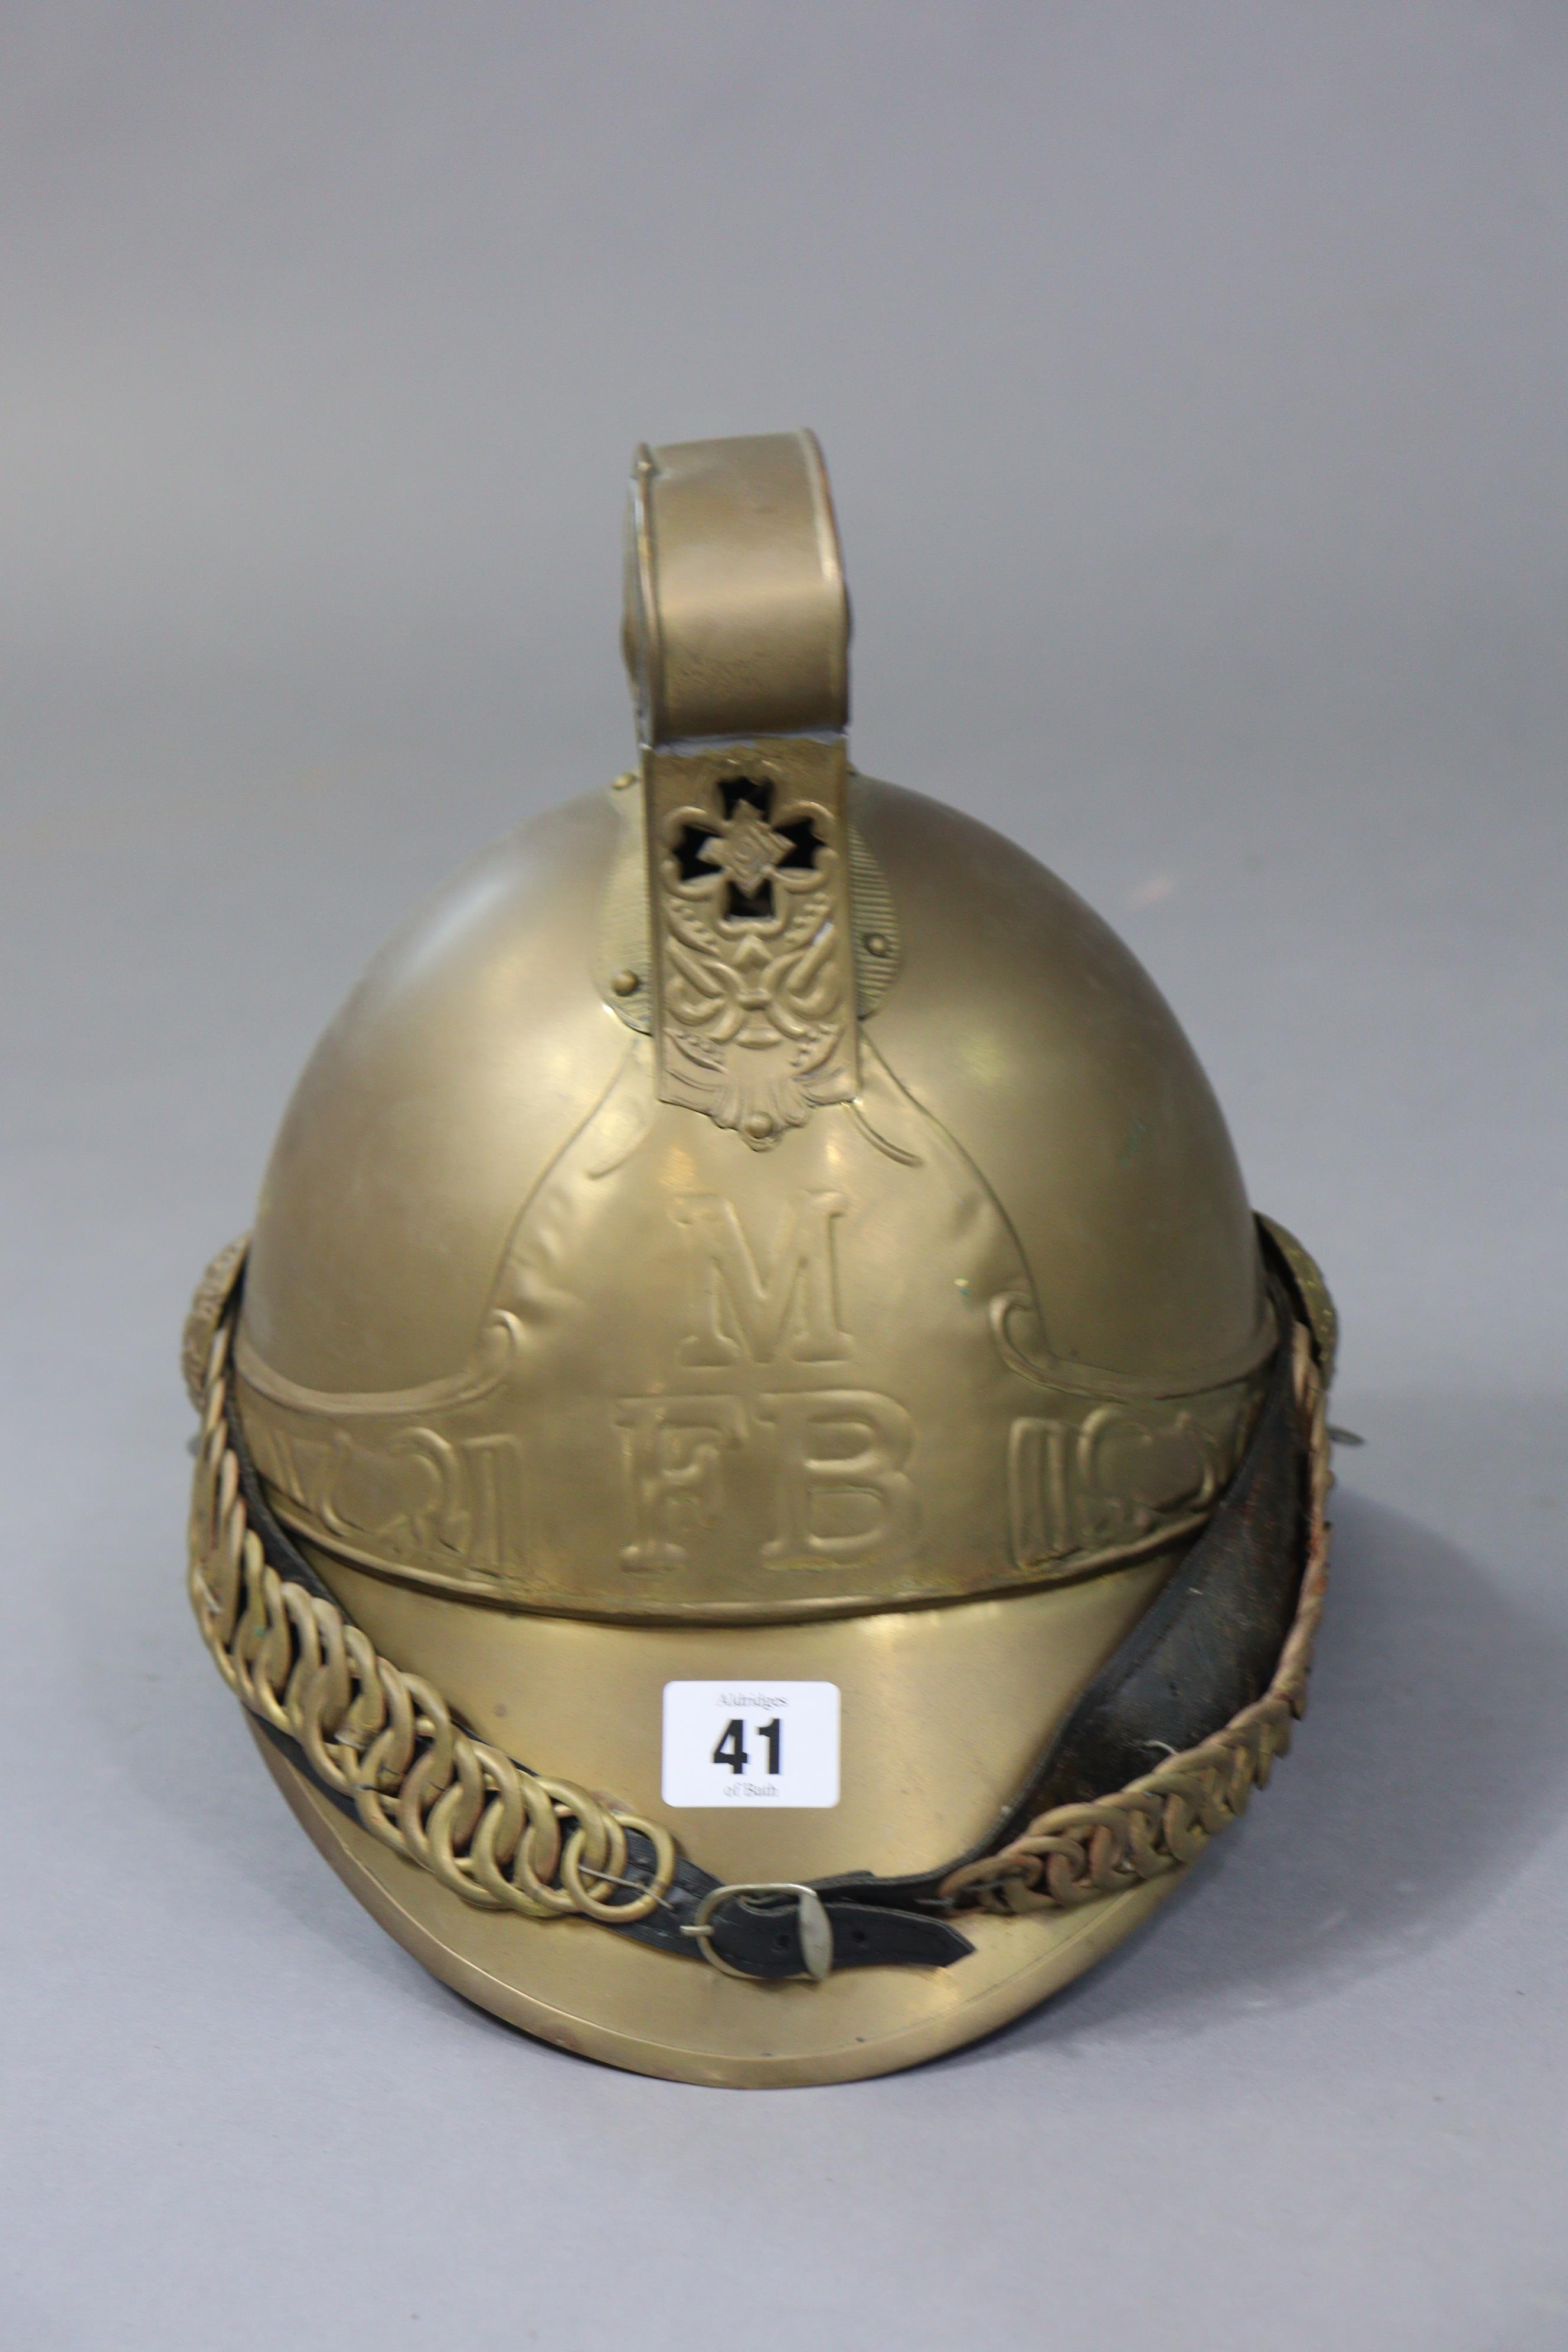 A replica Merryweather pattern brass fire men’s helmet. - Image 2 of 4